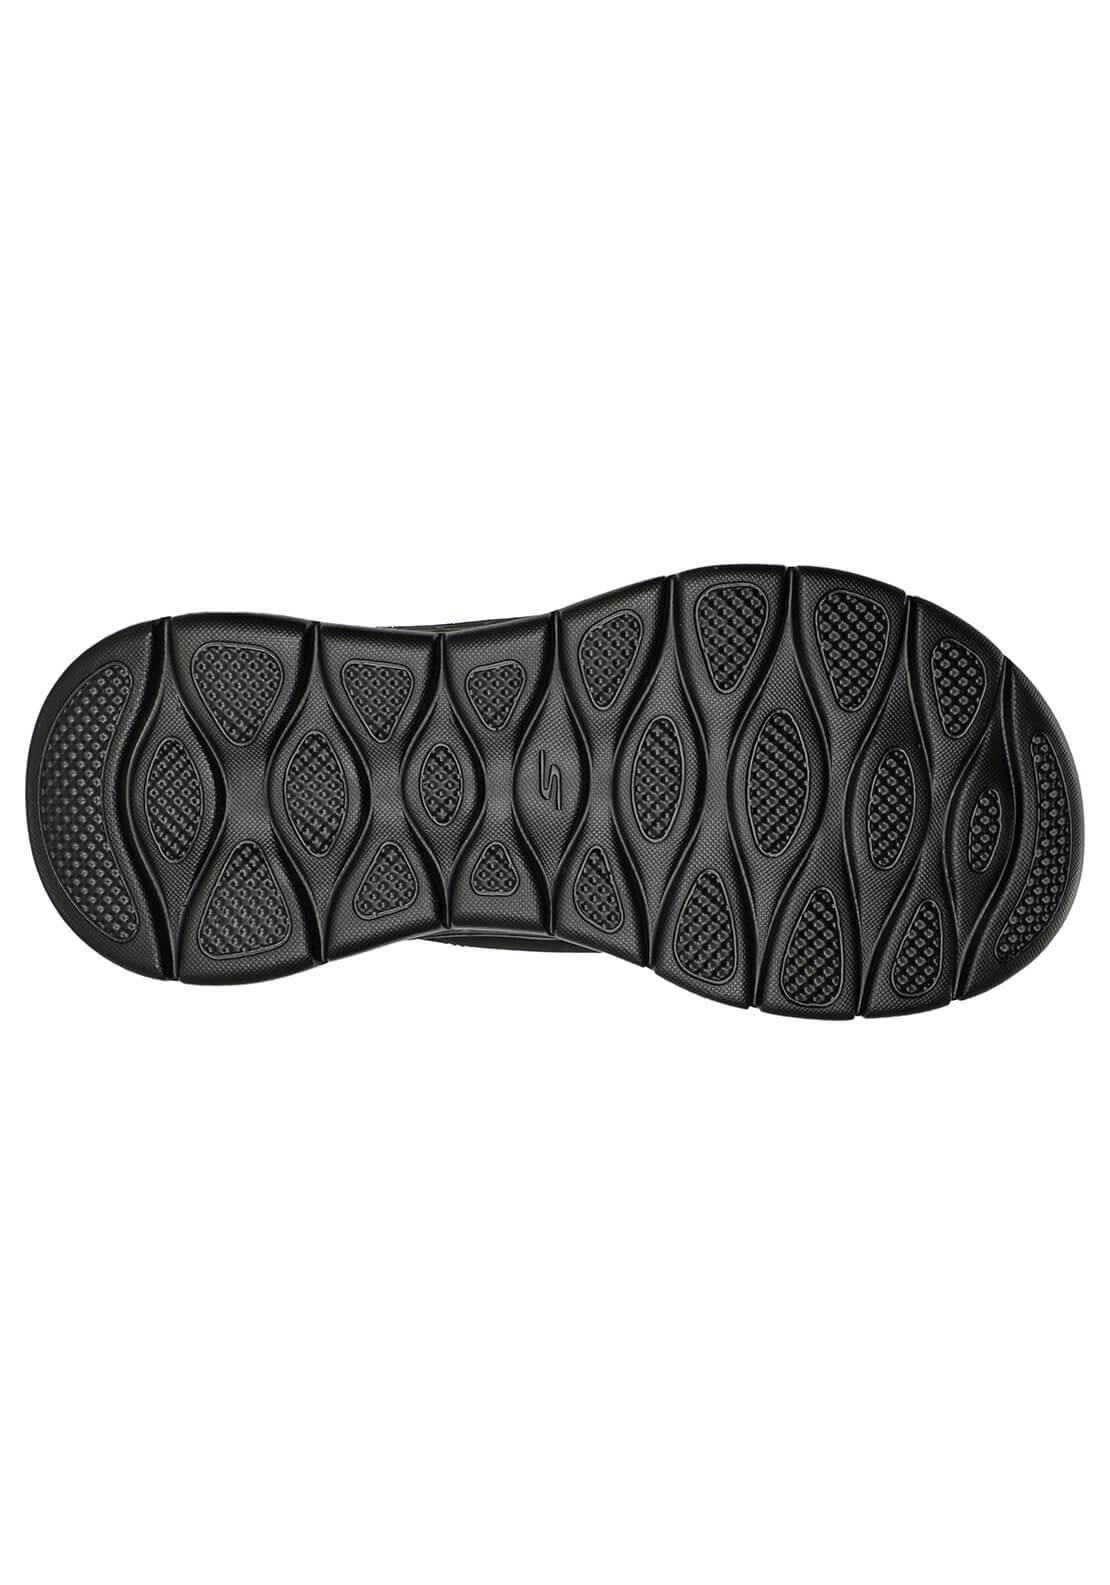 Skechers GO WALK FLEX Sandal Vallejo - Black 4 Shaws Department Stores